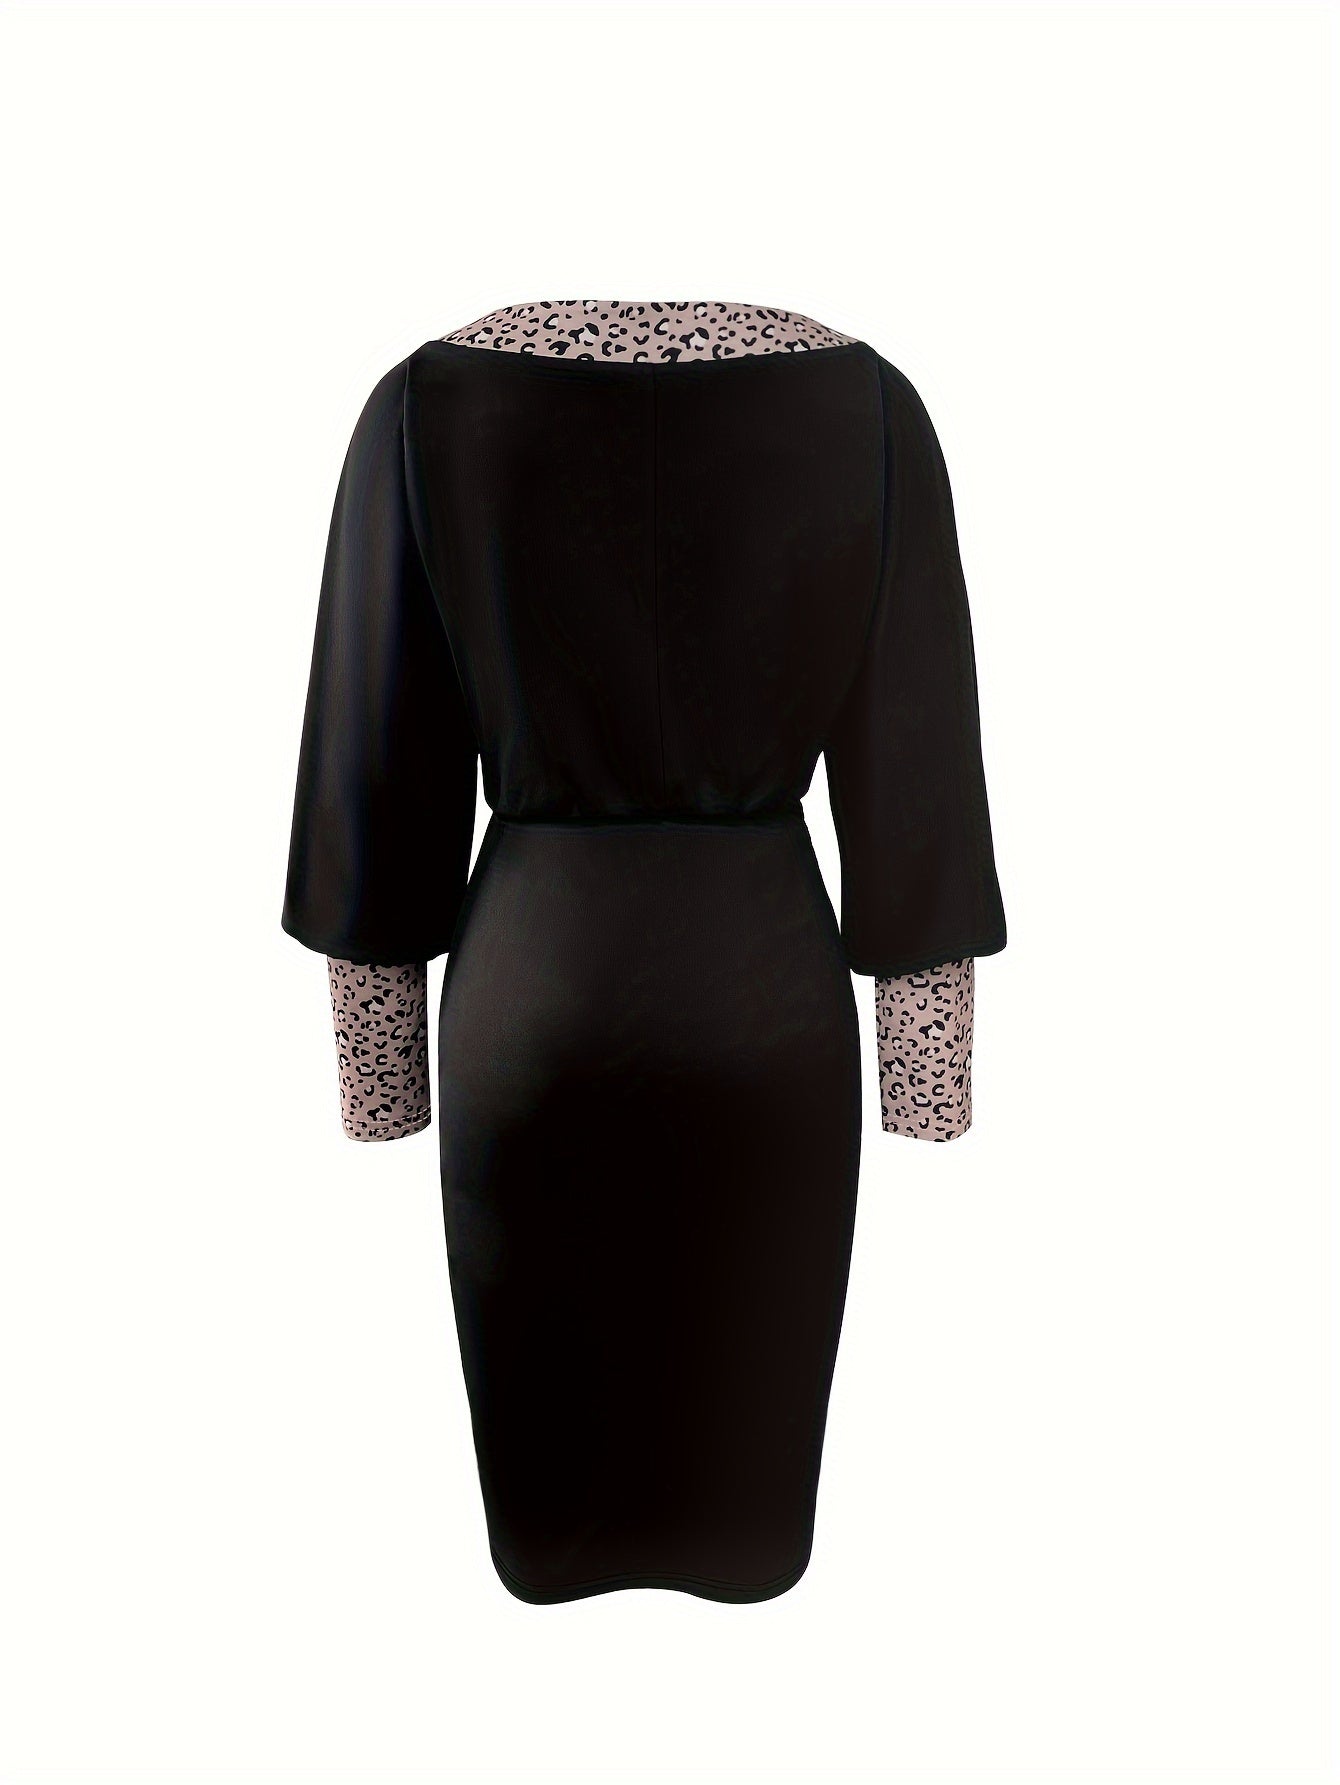 Leopard Print Contrast Trim Dress, Elegant Surplice Neck Long Sleeve Dress, Women's Clothing